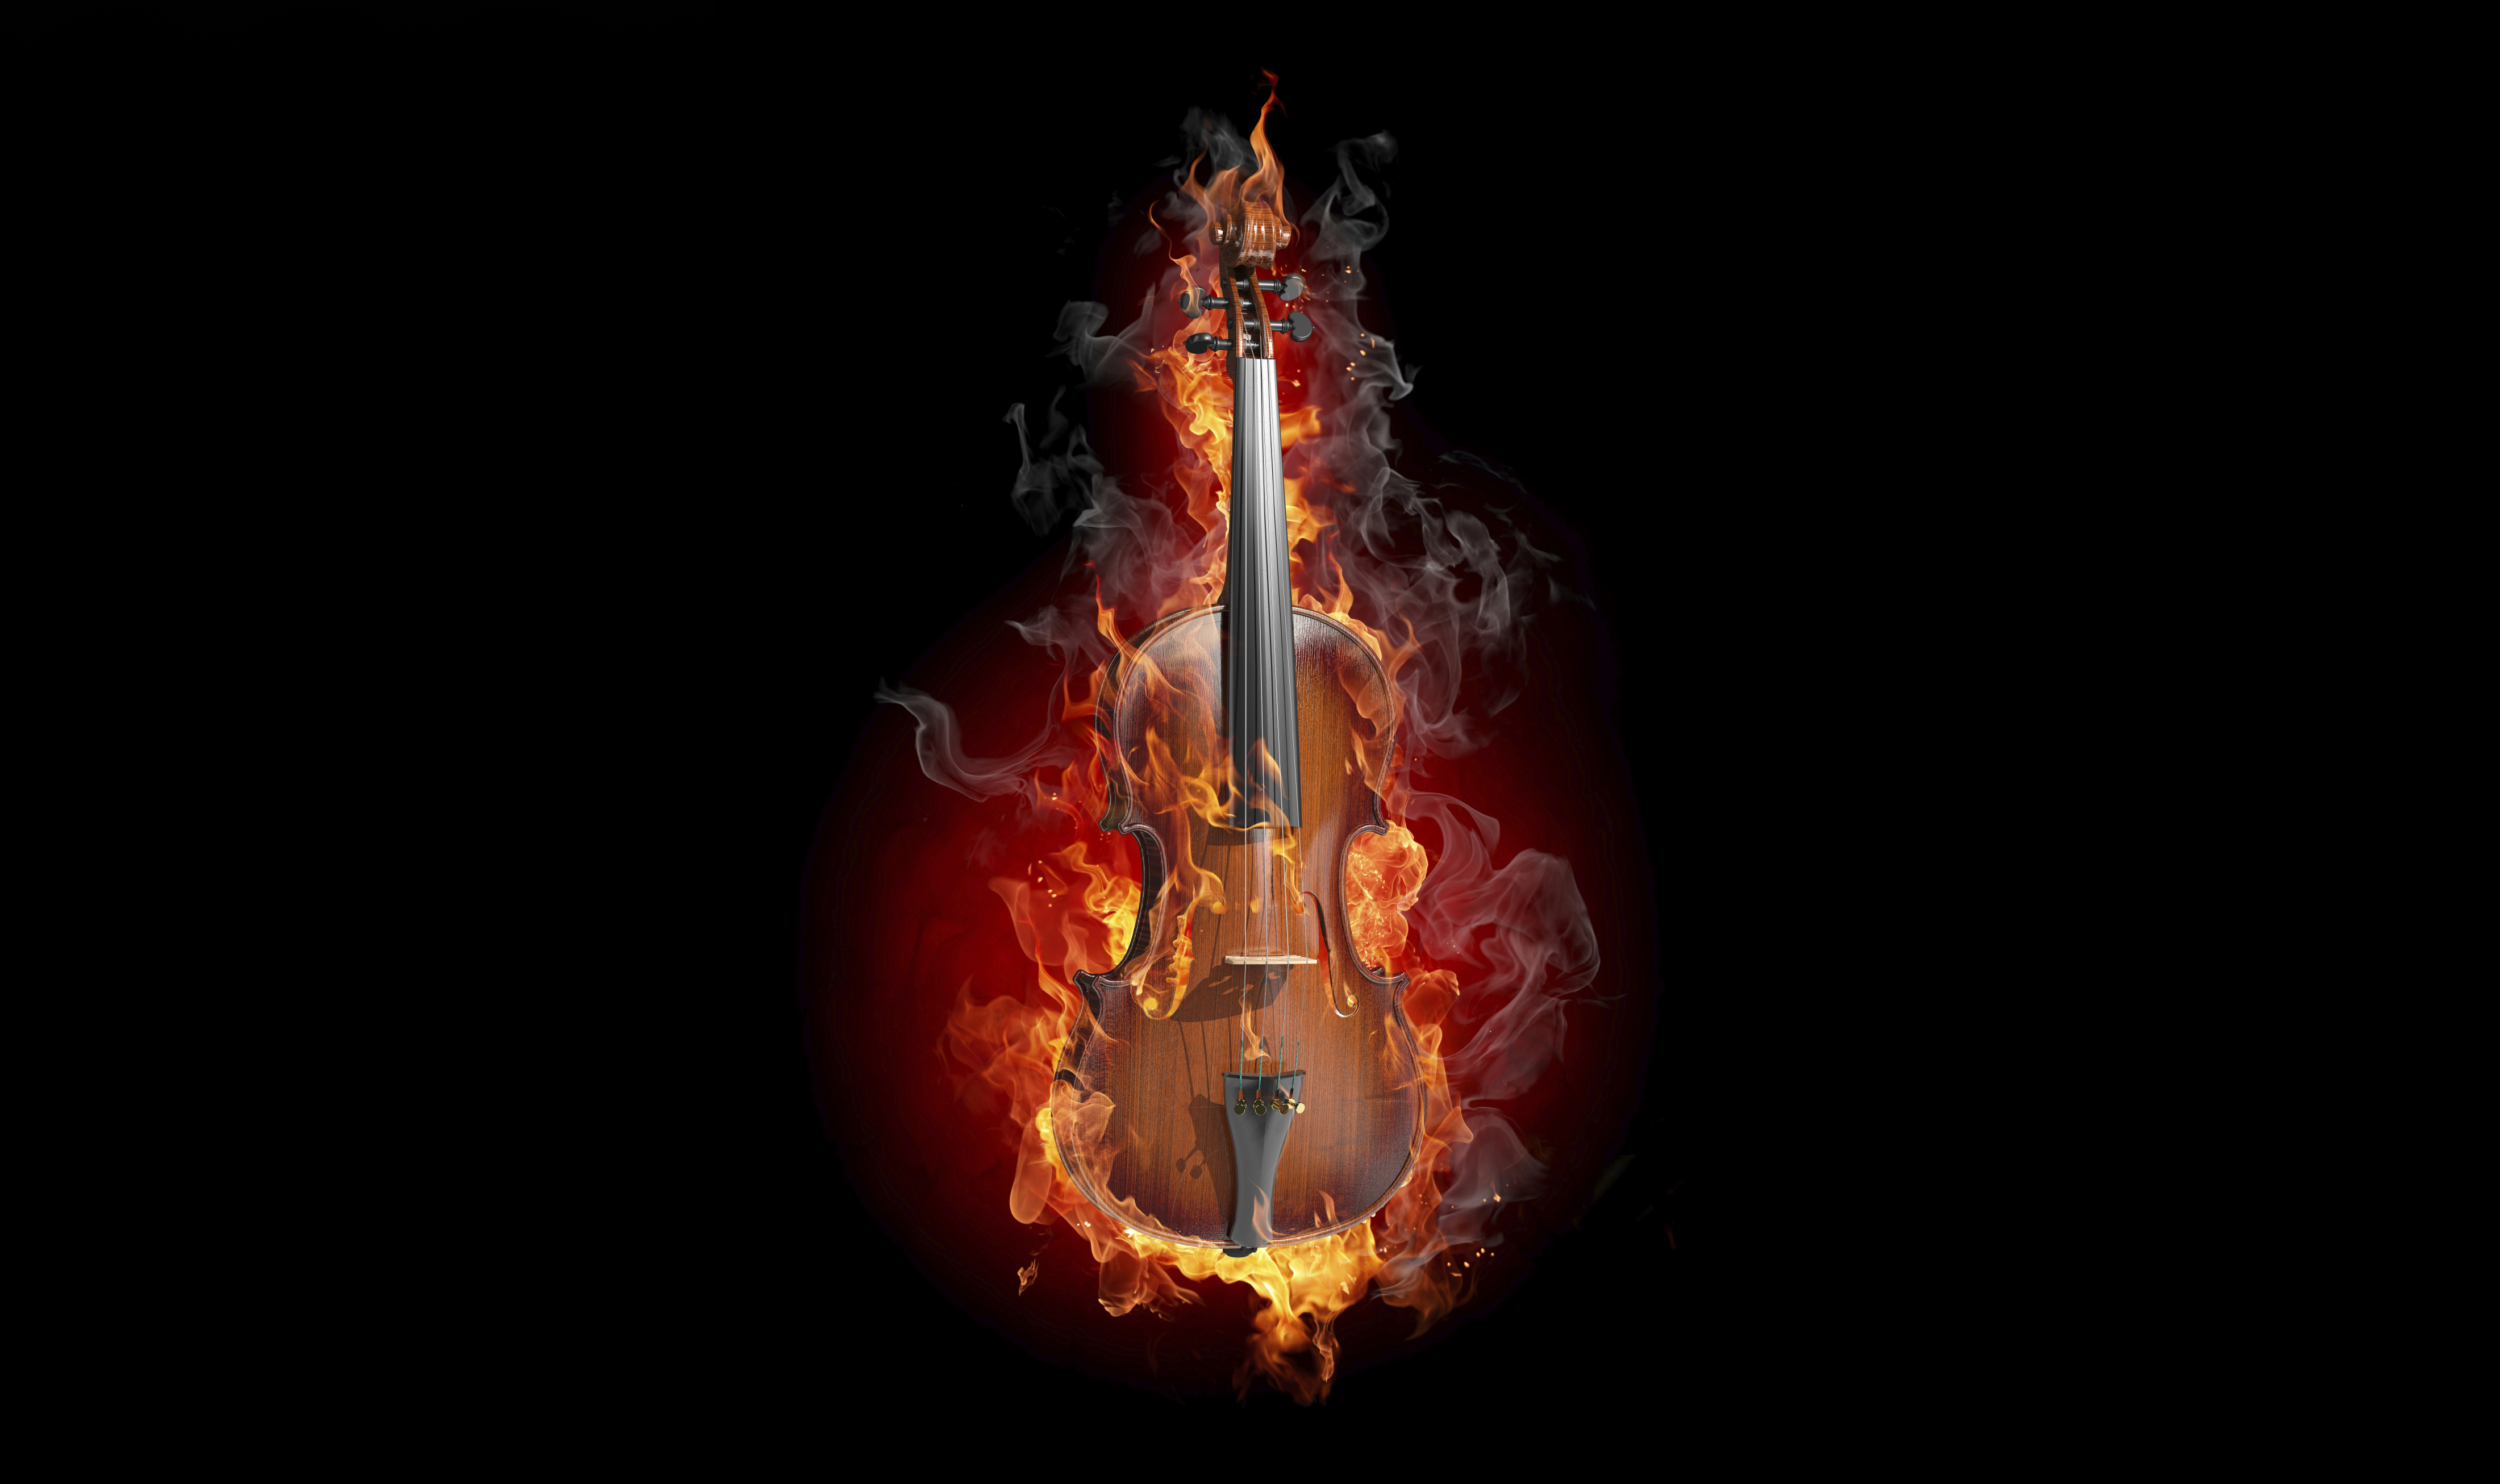 4k Wallpaper Music Smoke Creative Fire Violin